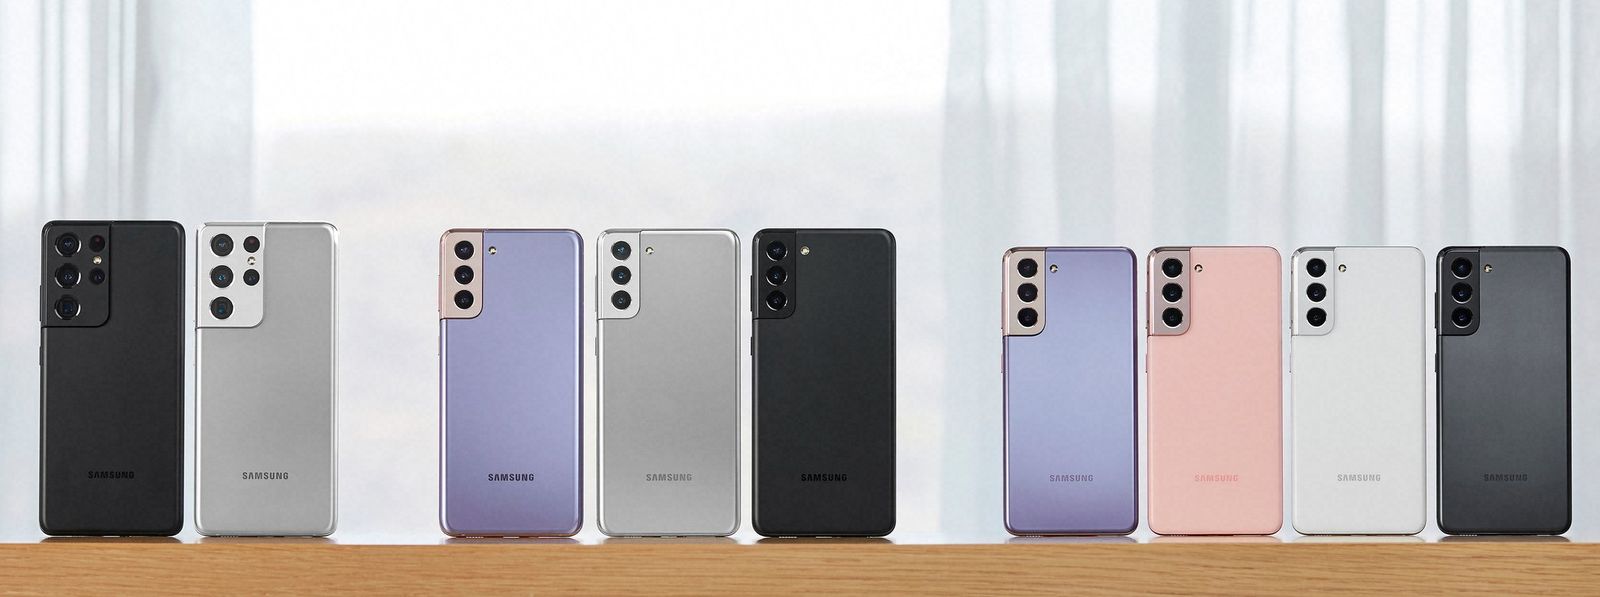 Samsung Galaxy s21 Ultra цвета